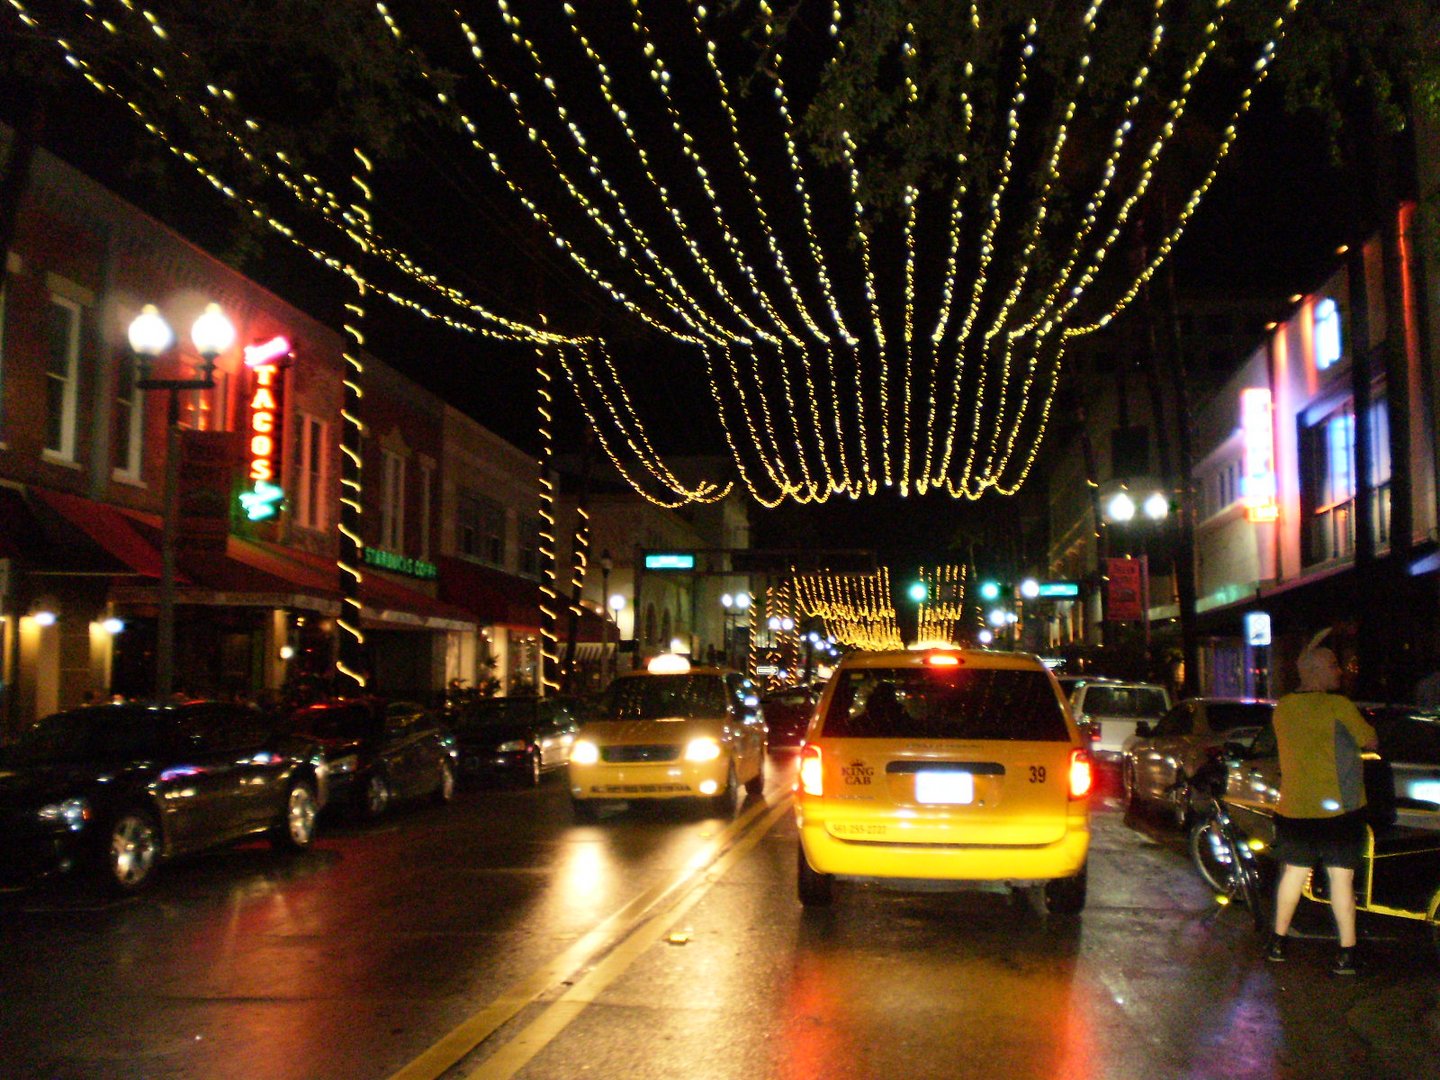 Clematis street at night - PB - Florida